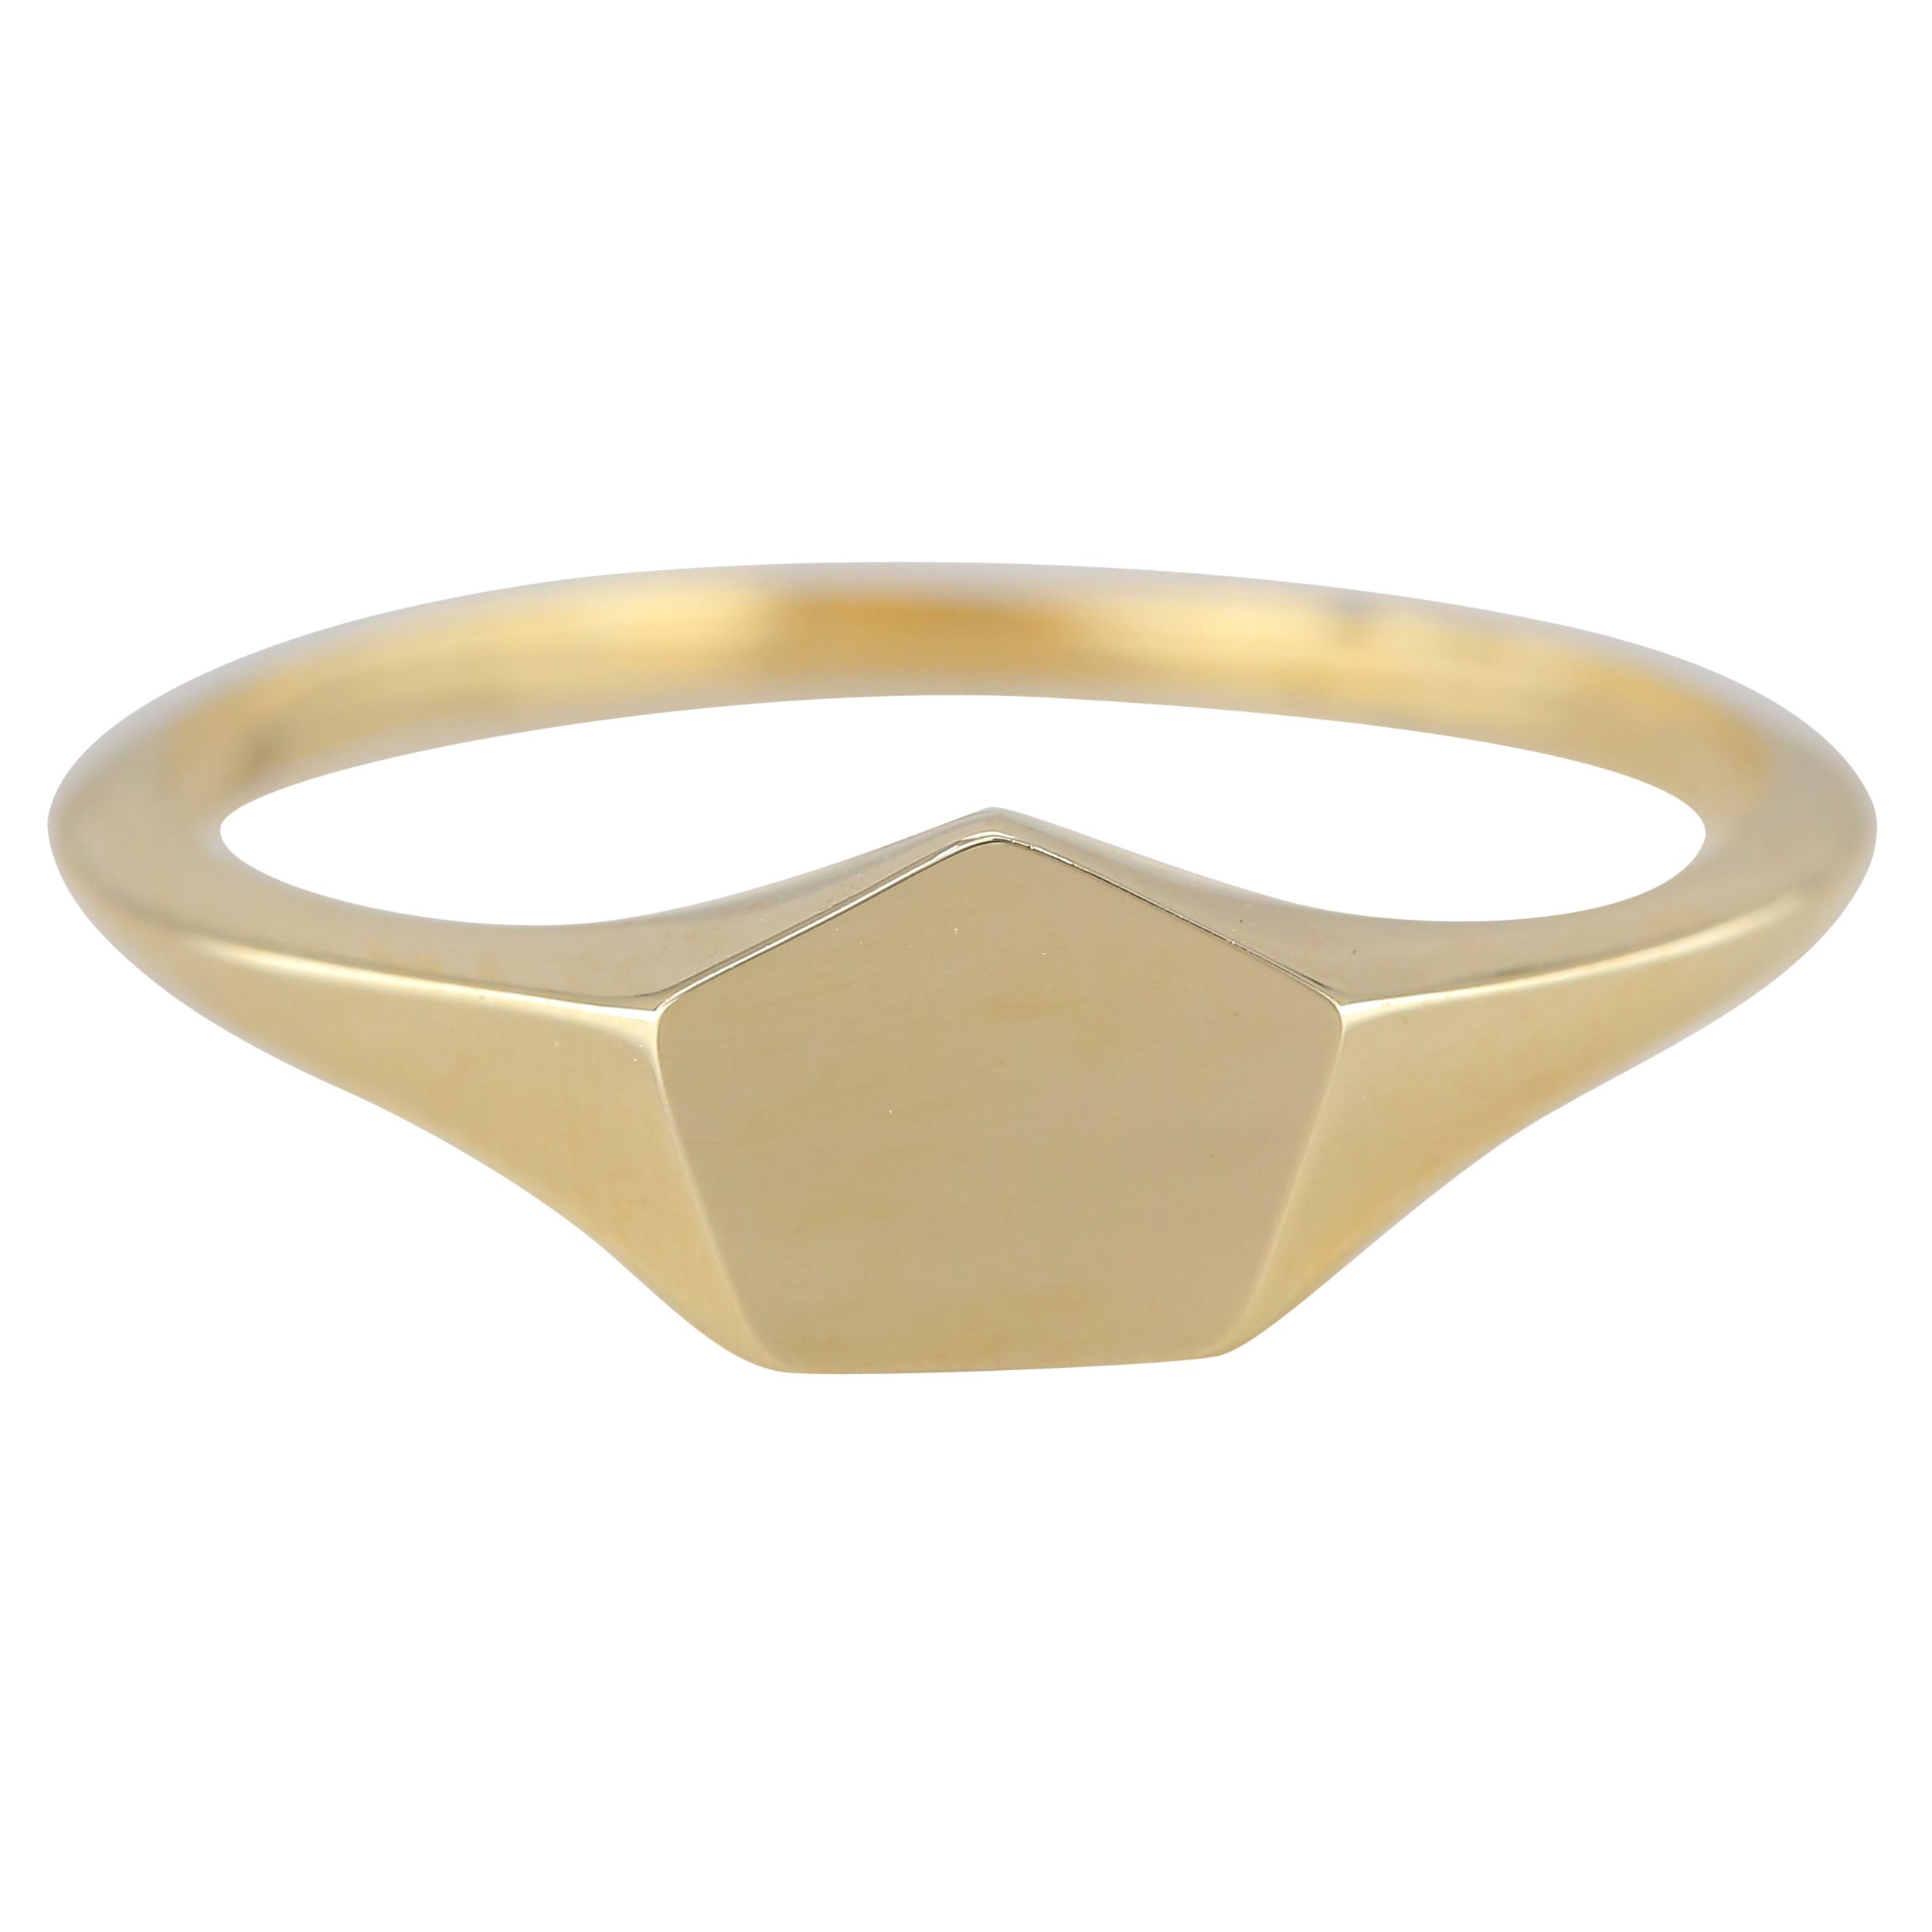 Rosay Siegelring, 14K Gold Rosay Pentagon Siegelring, kleiner Pentagonal Ring